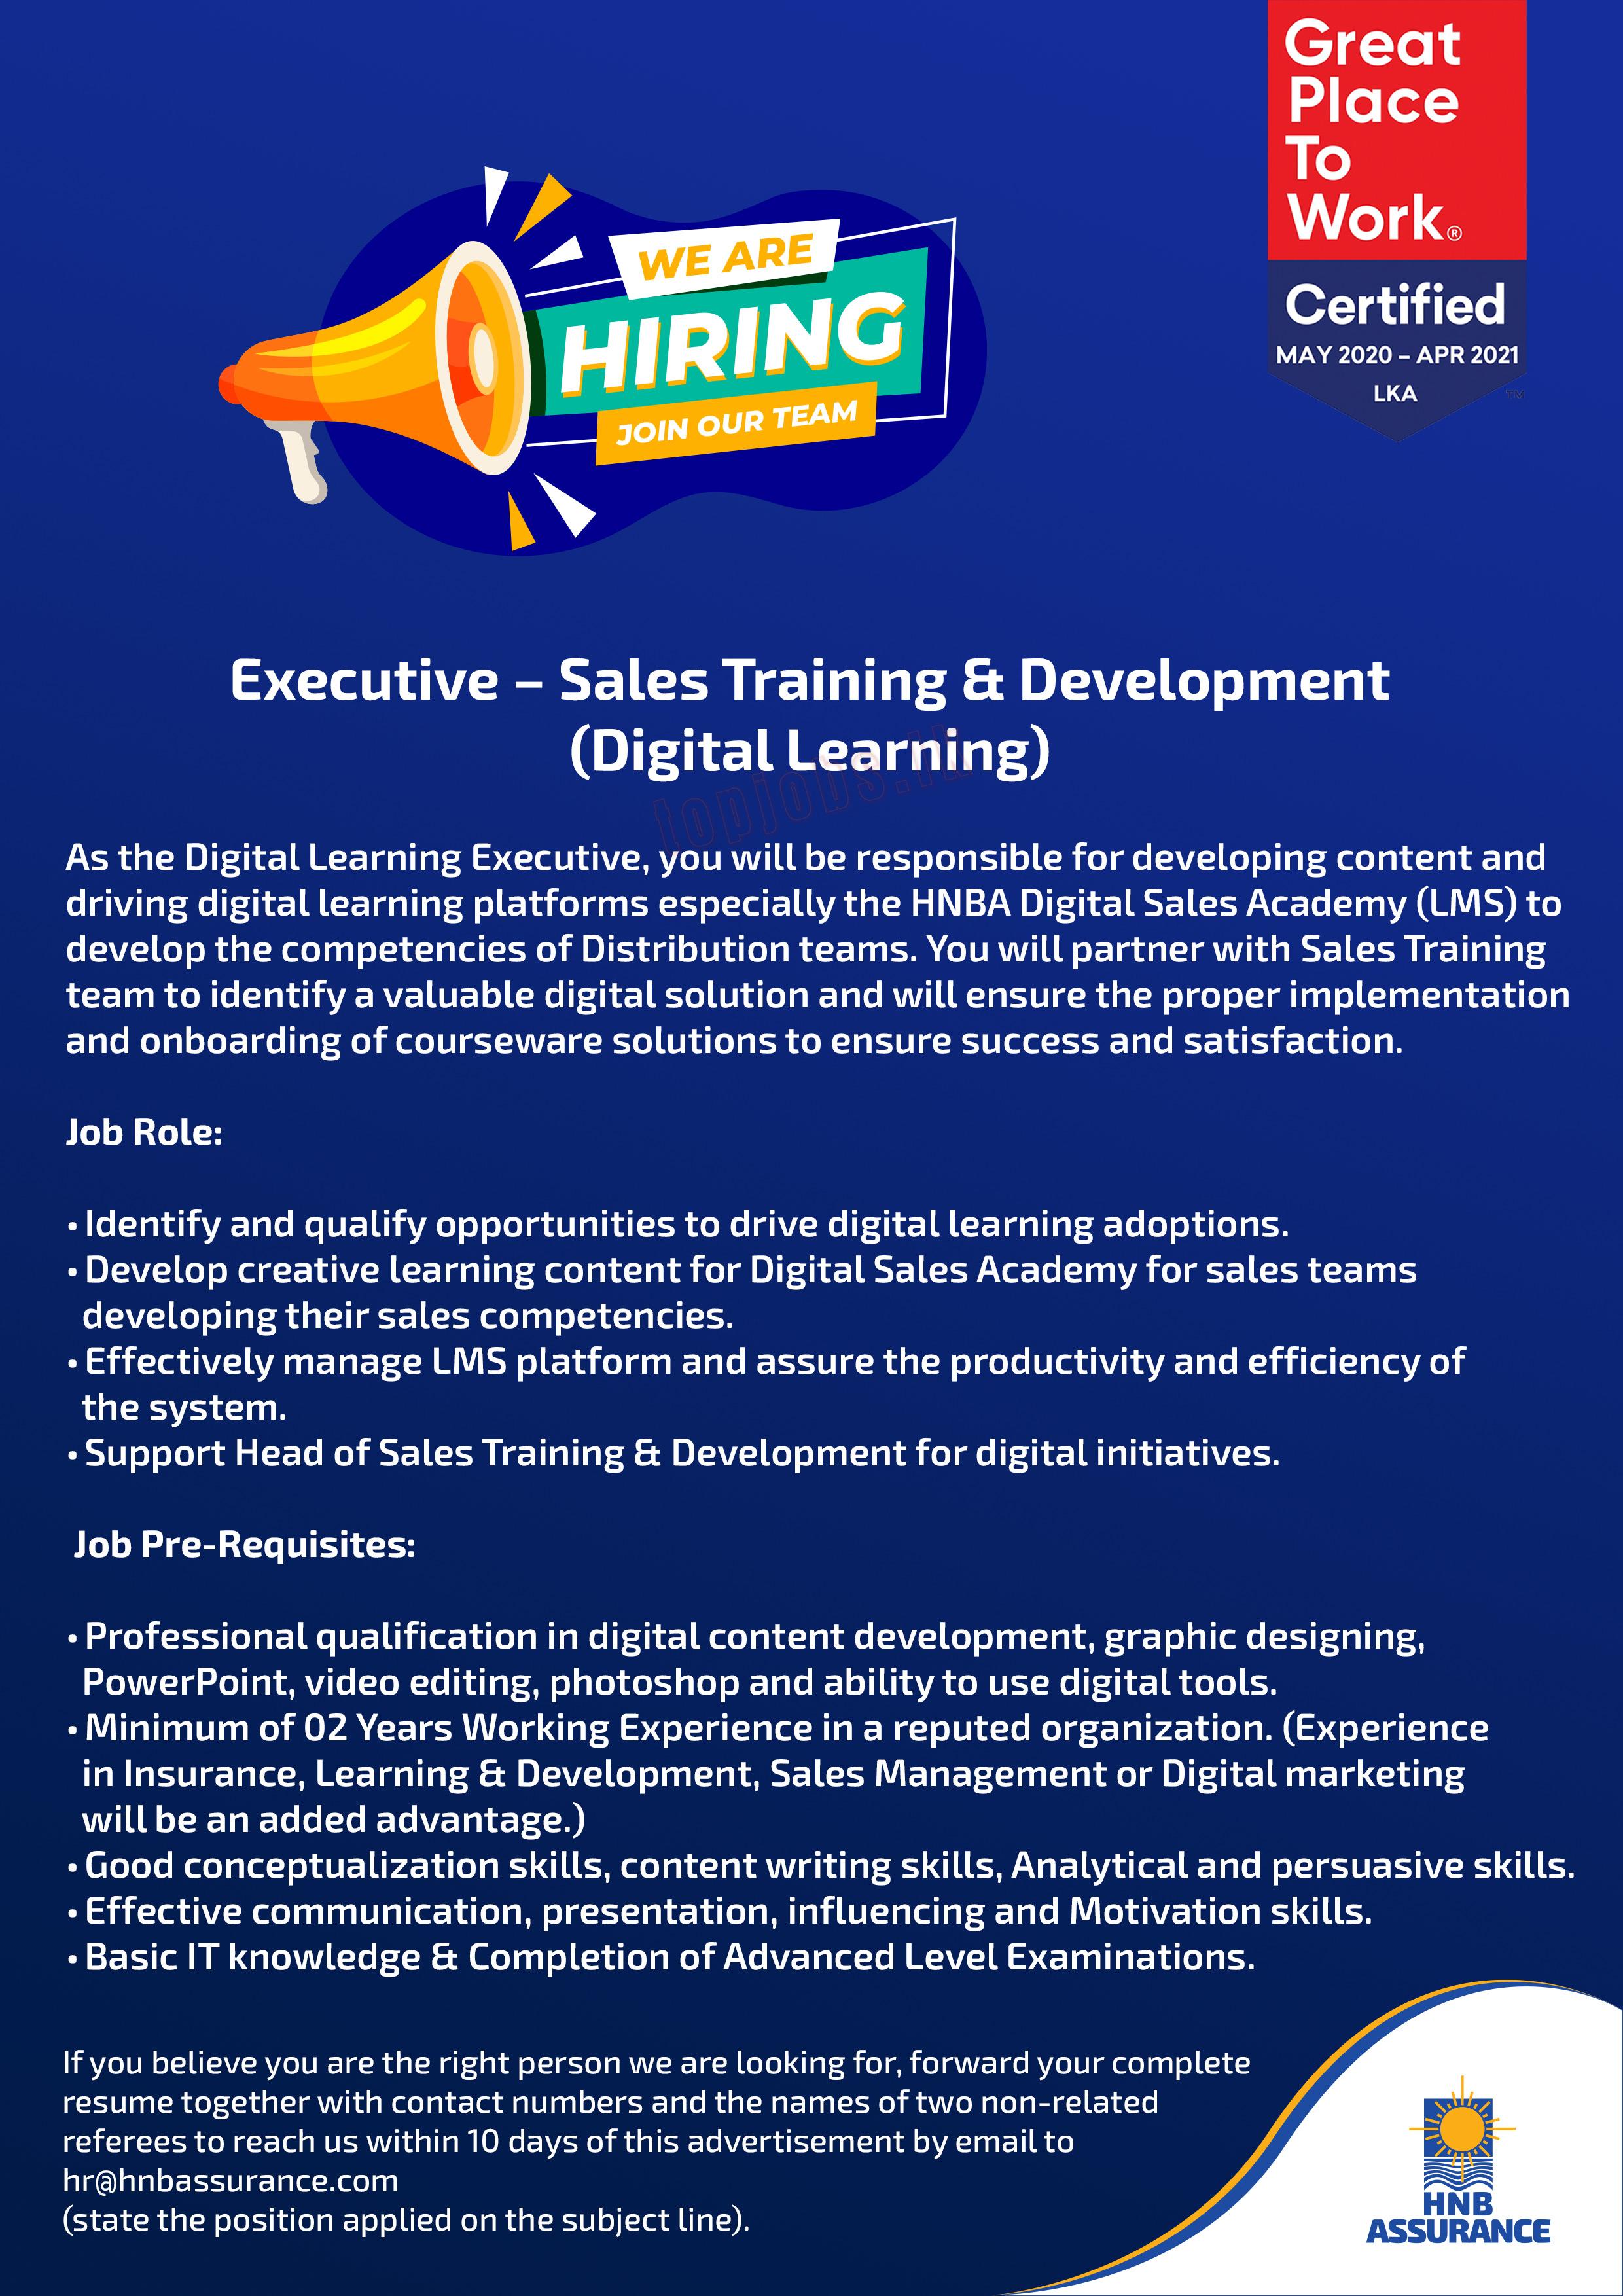 Executive of Sales Training & Development Vacancy in HNB Assurance